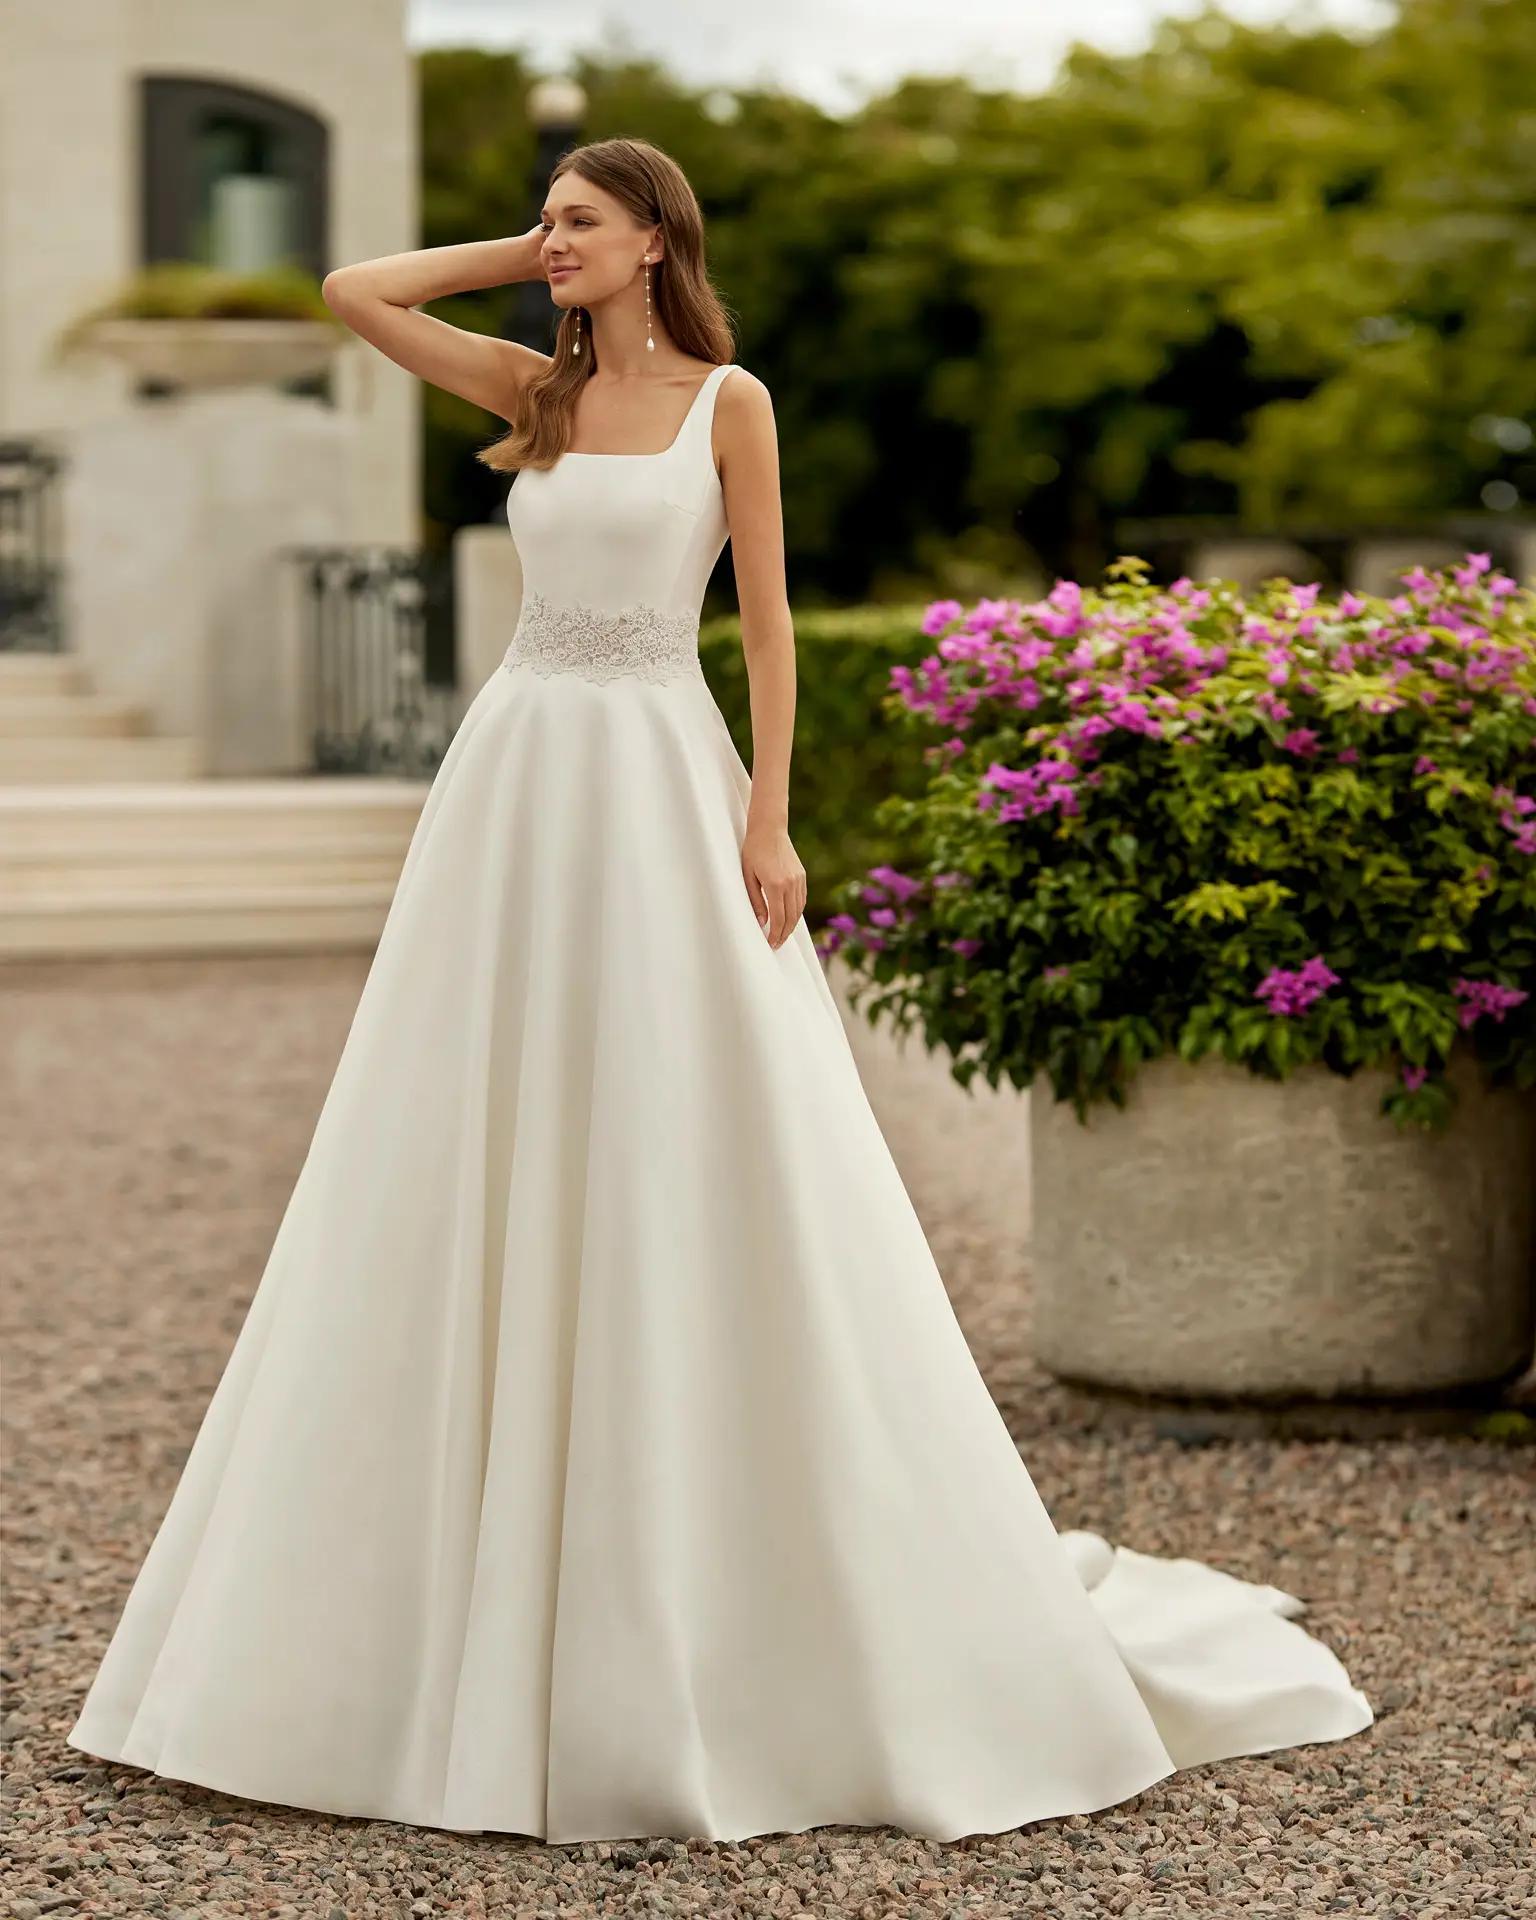 Square neckline wedding dress with detailed waistline and ballgown skirt by Rosa Clara style Eva